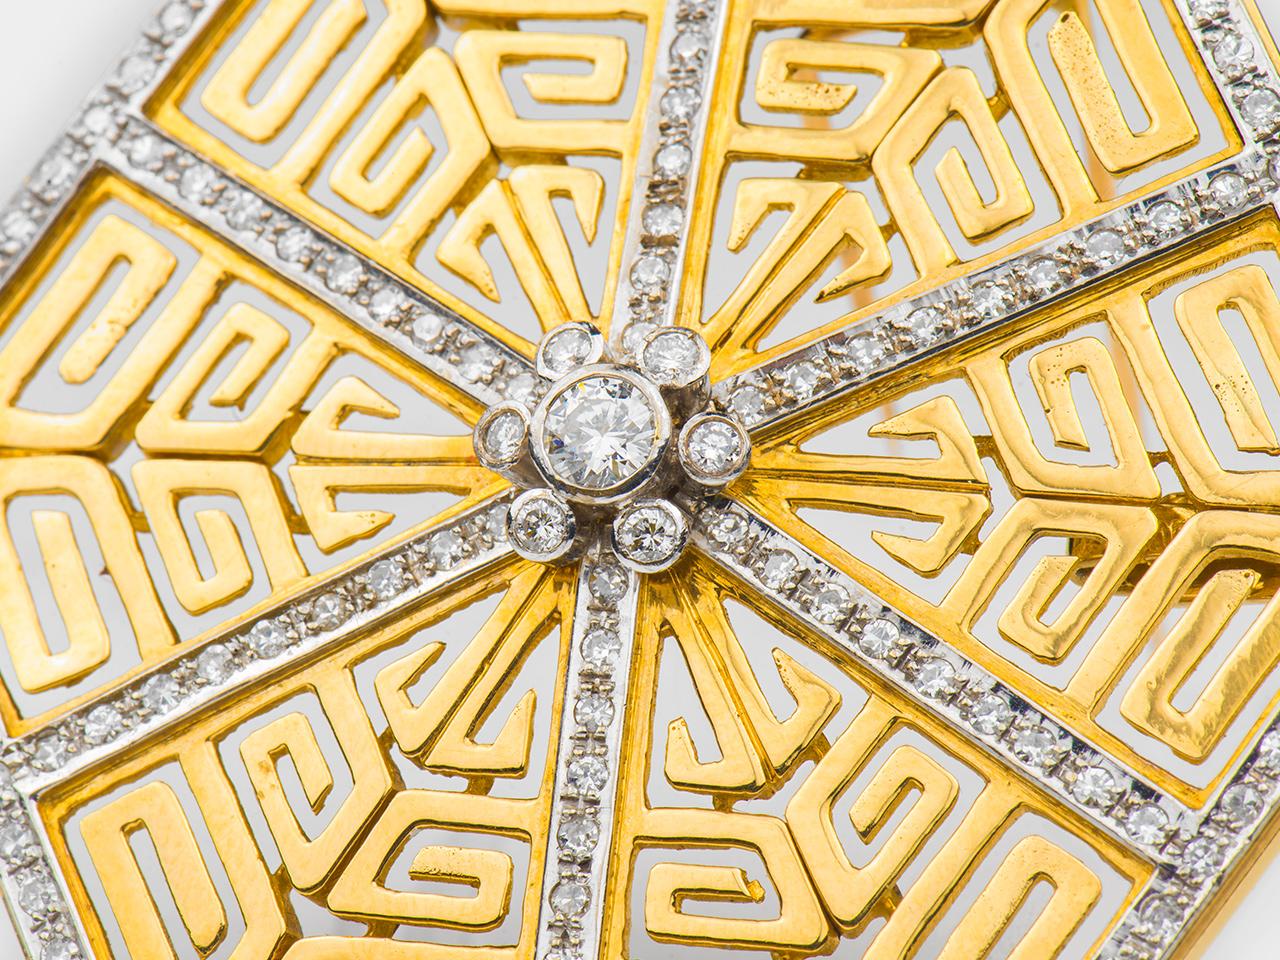 18k gold and diamond pendant necklace in a Greek Key design. SIGNED GREECE 750 ILIAS LALAOUNIS. Pendant detachable.